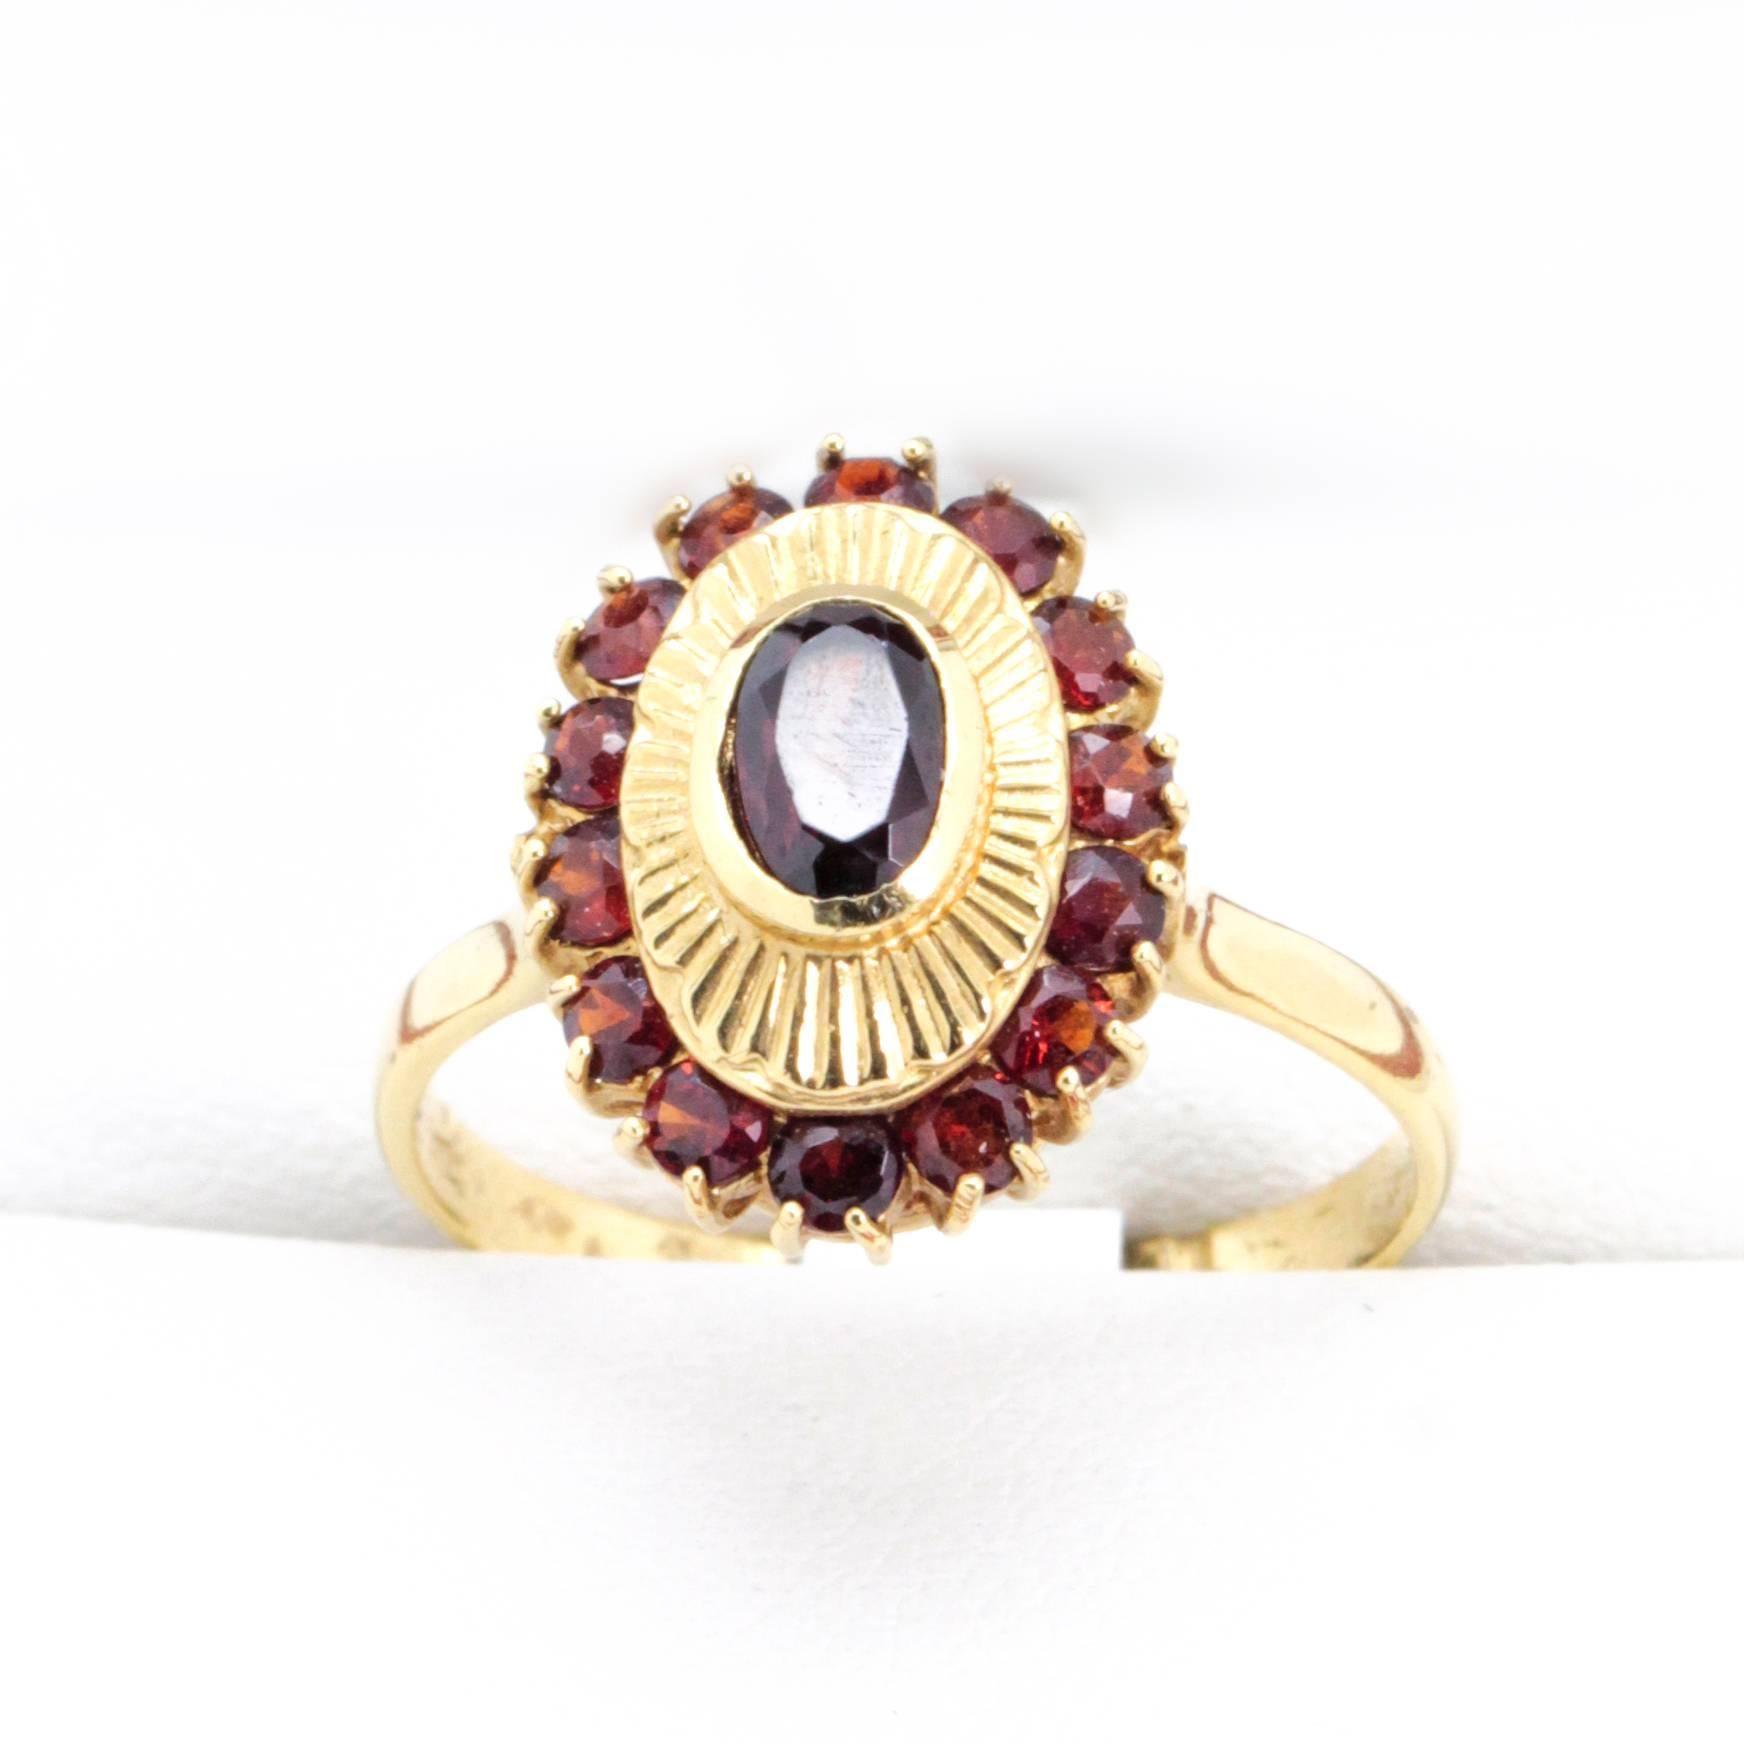 Vintage Oval Starburst Garnet Ring In Excellent Condition For Sale In Sydney CBD, AU